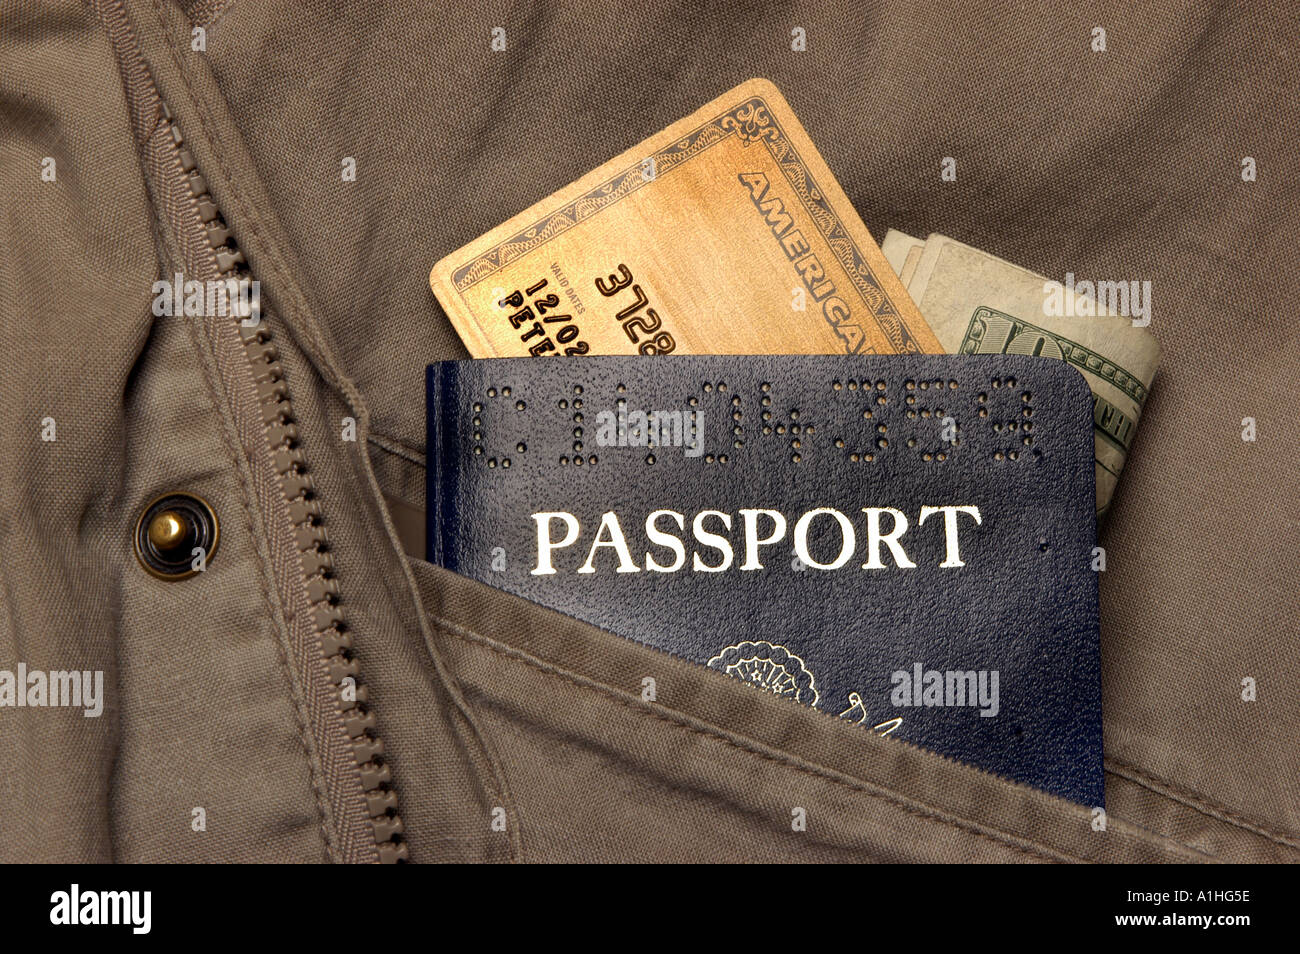 Safari jacket with passport and credit card Stock Photo